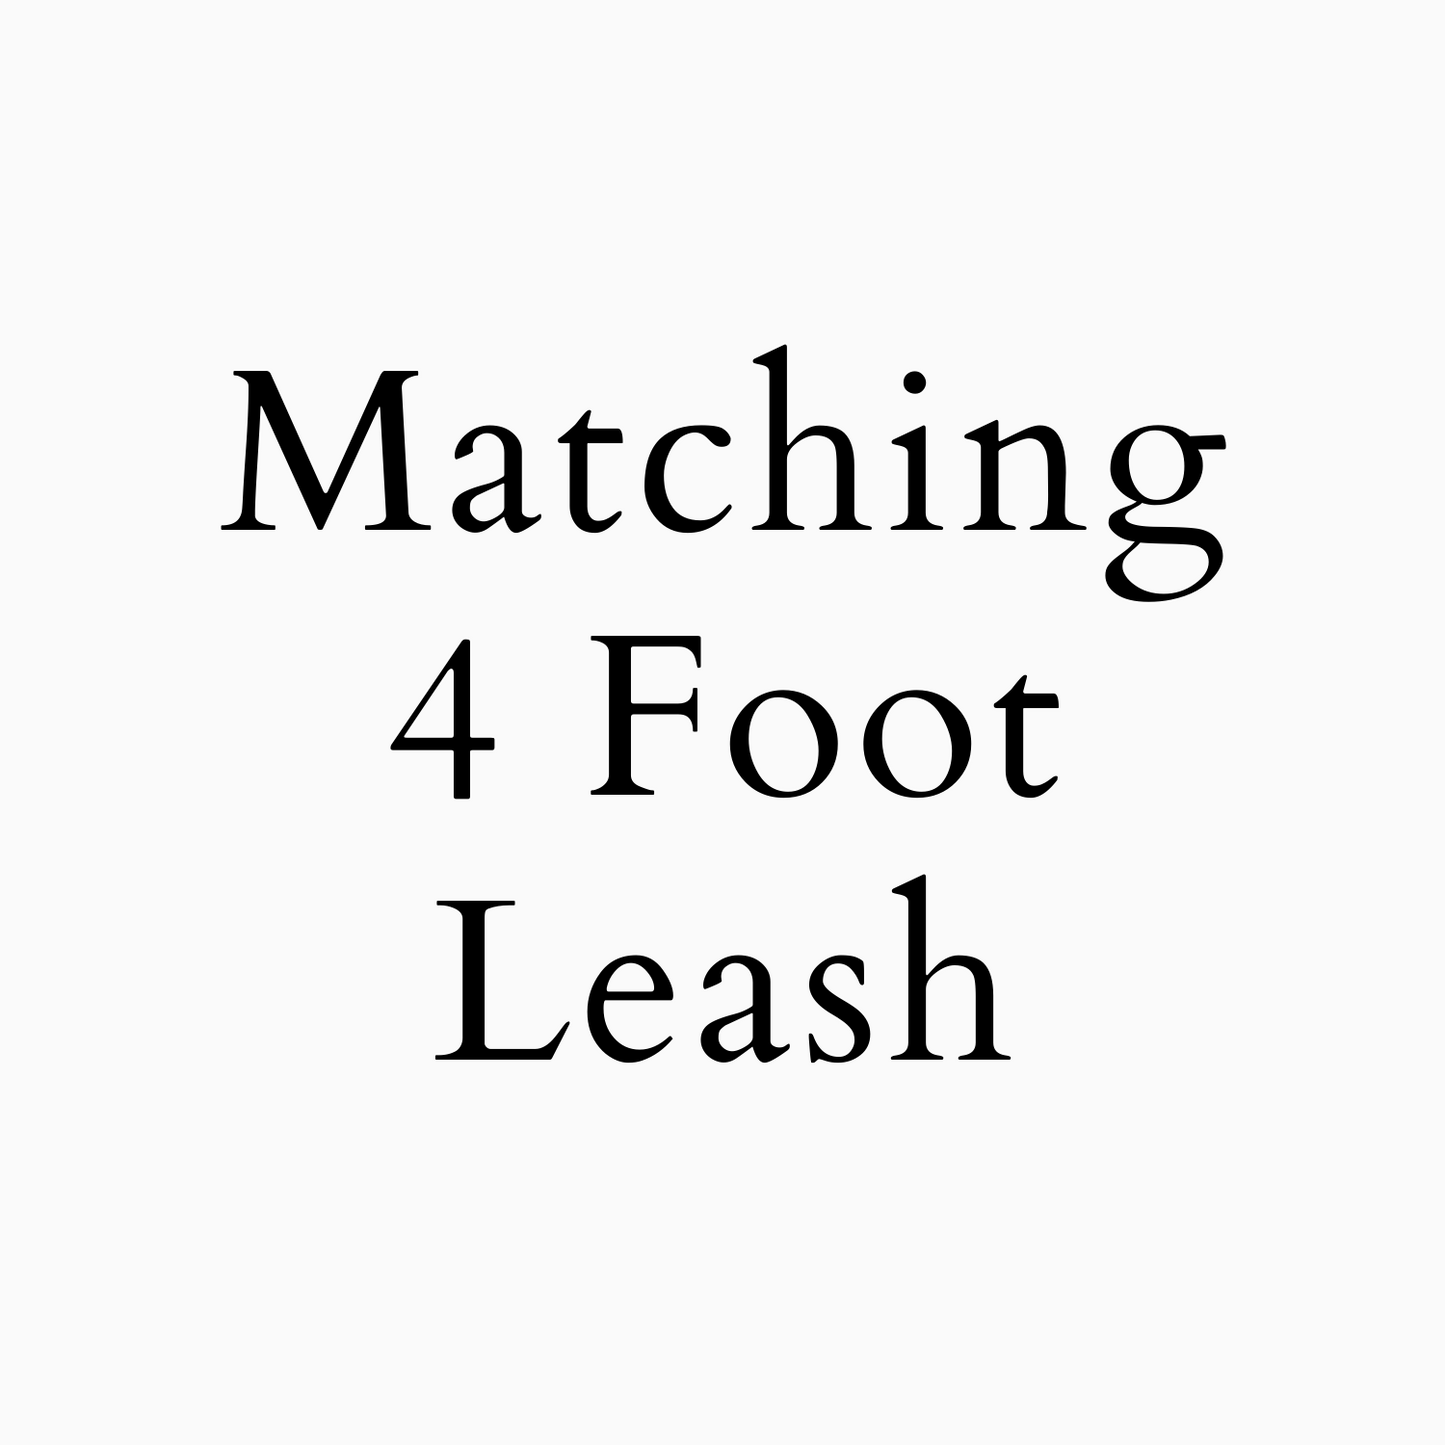 Add Matching 4 Foot Leash (+$41)